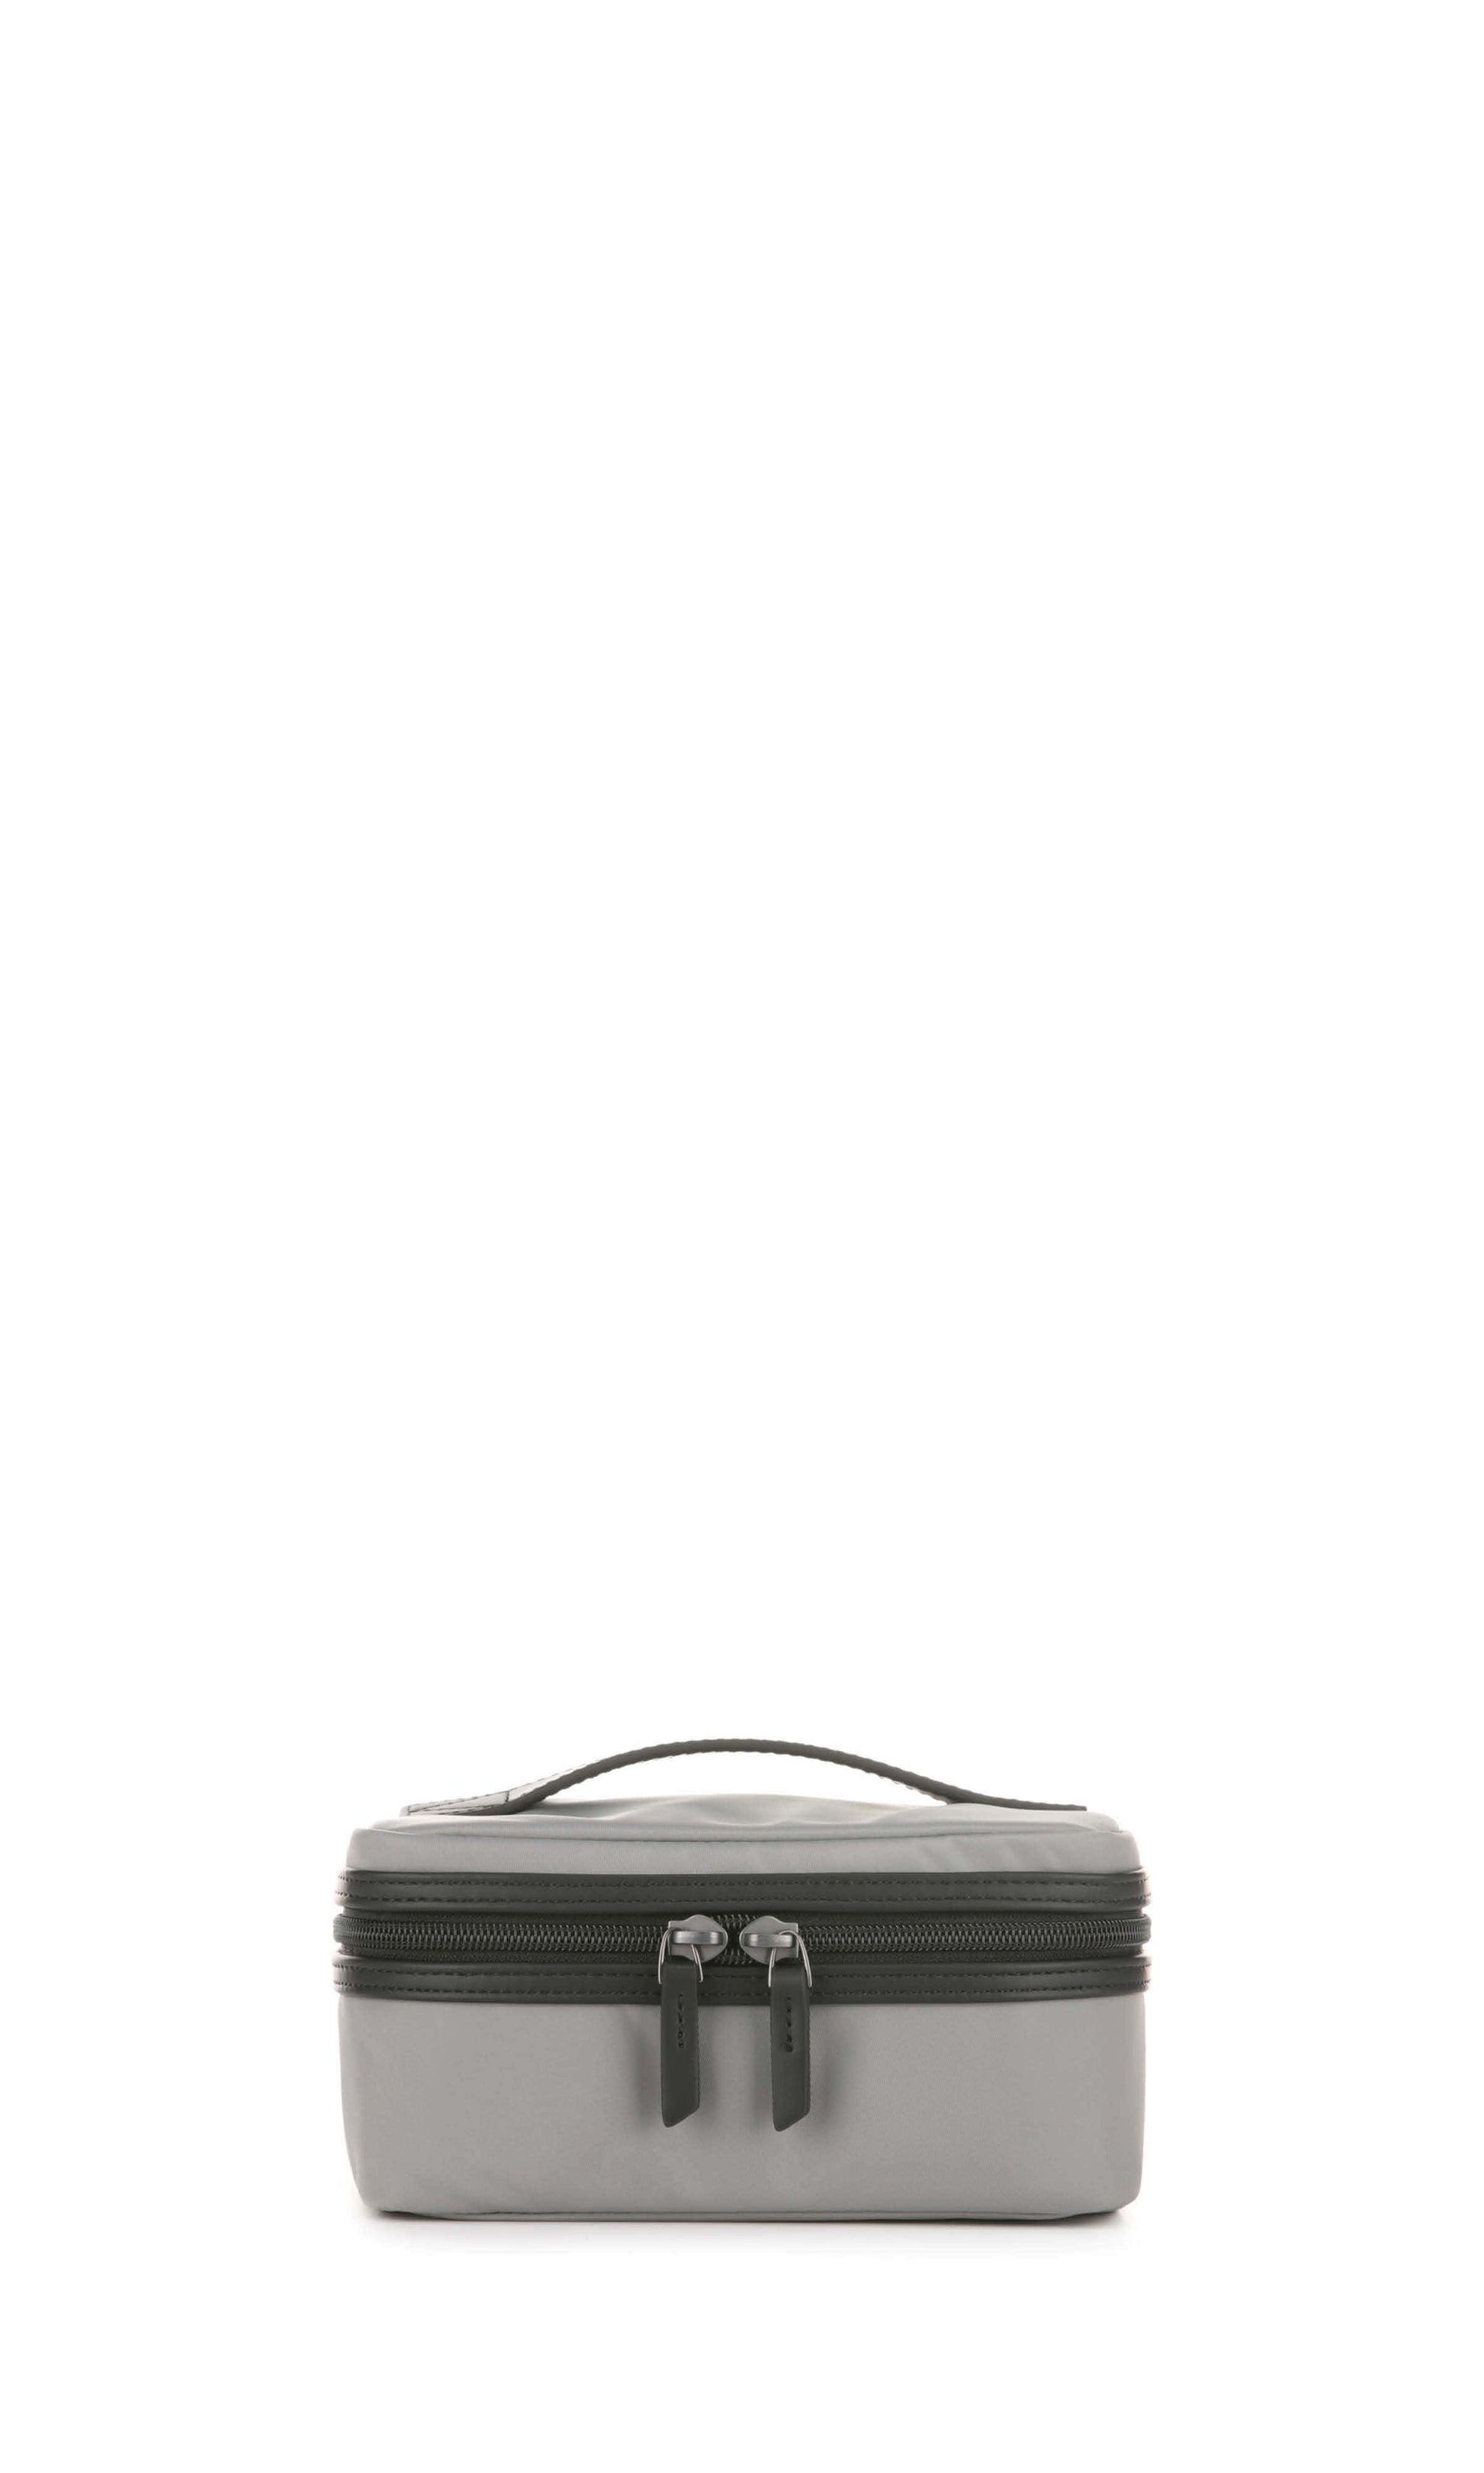 Antler Luggage -  Chelsea small wash bag in grey - Accessories Chelsea Small Wash Bag Grey | Travel Accessories | Antler UK